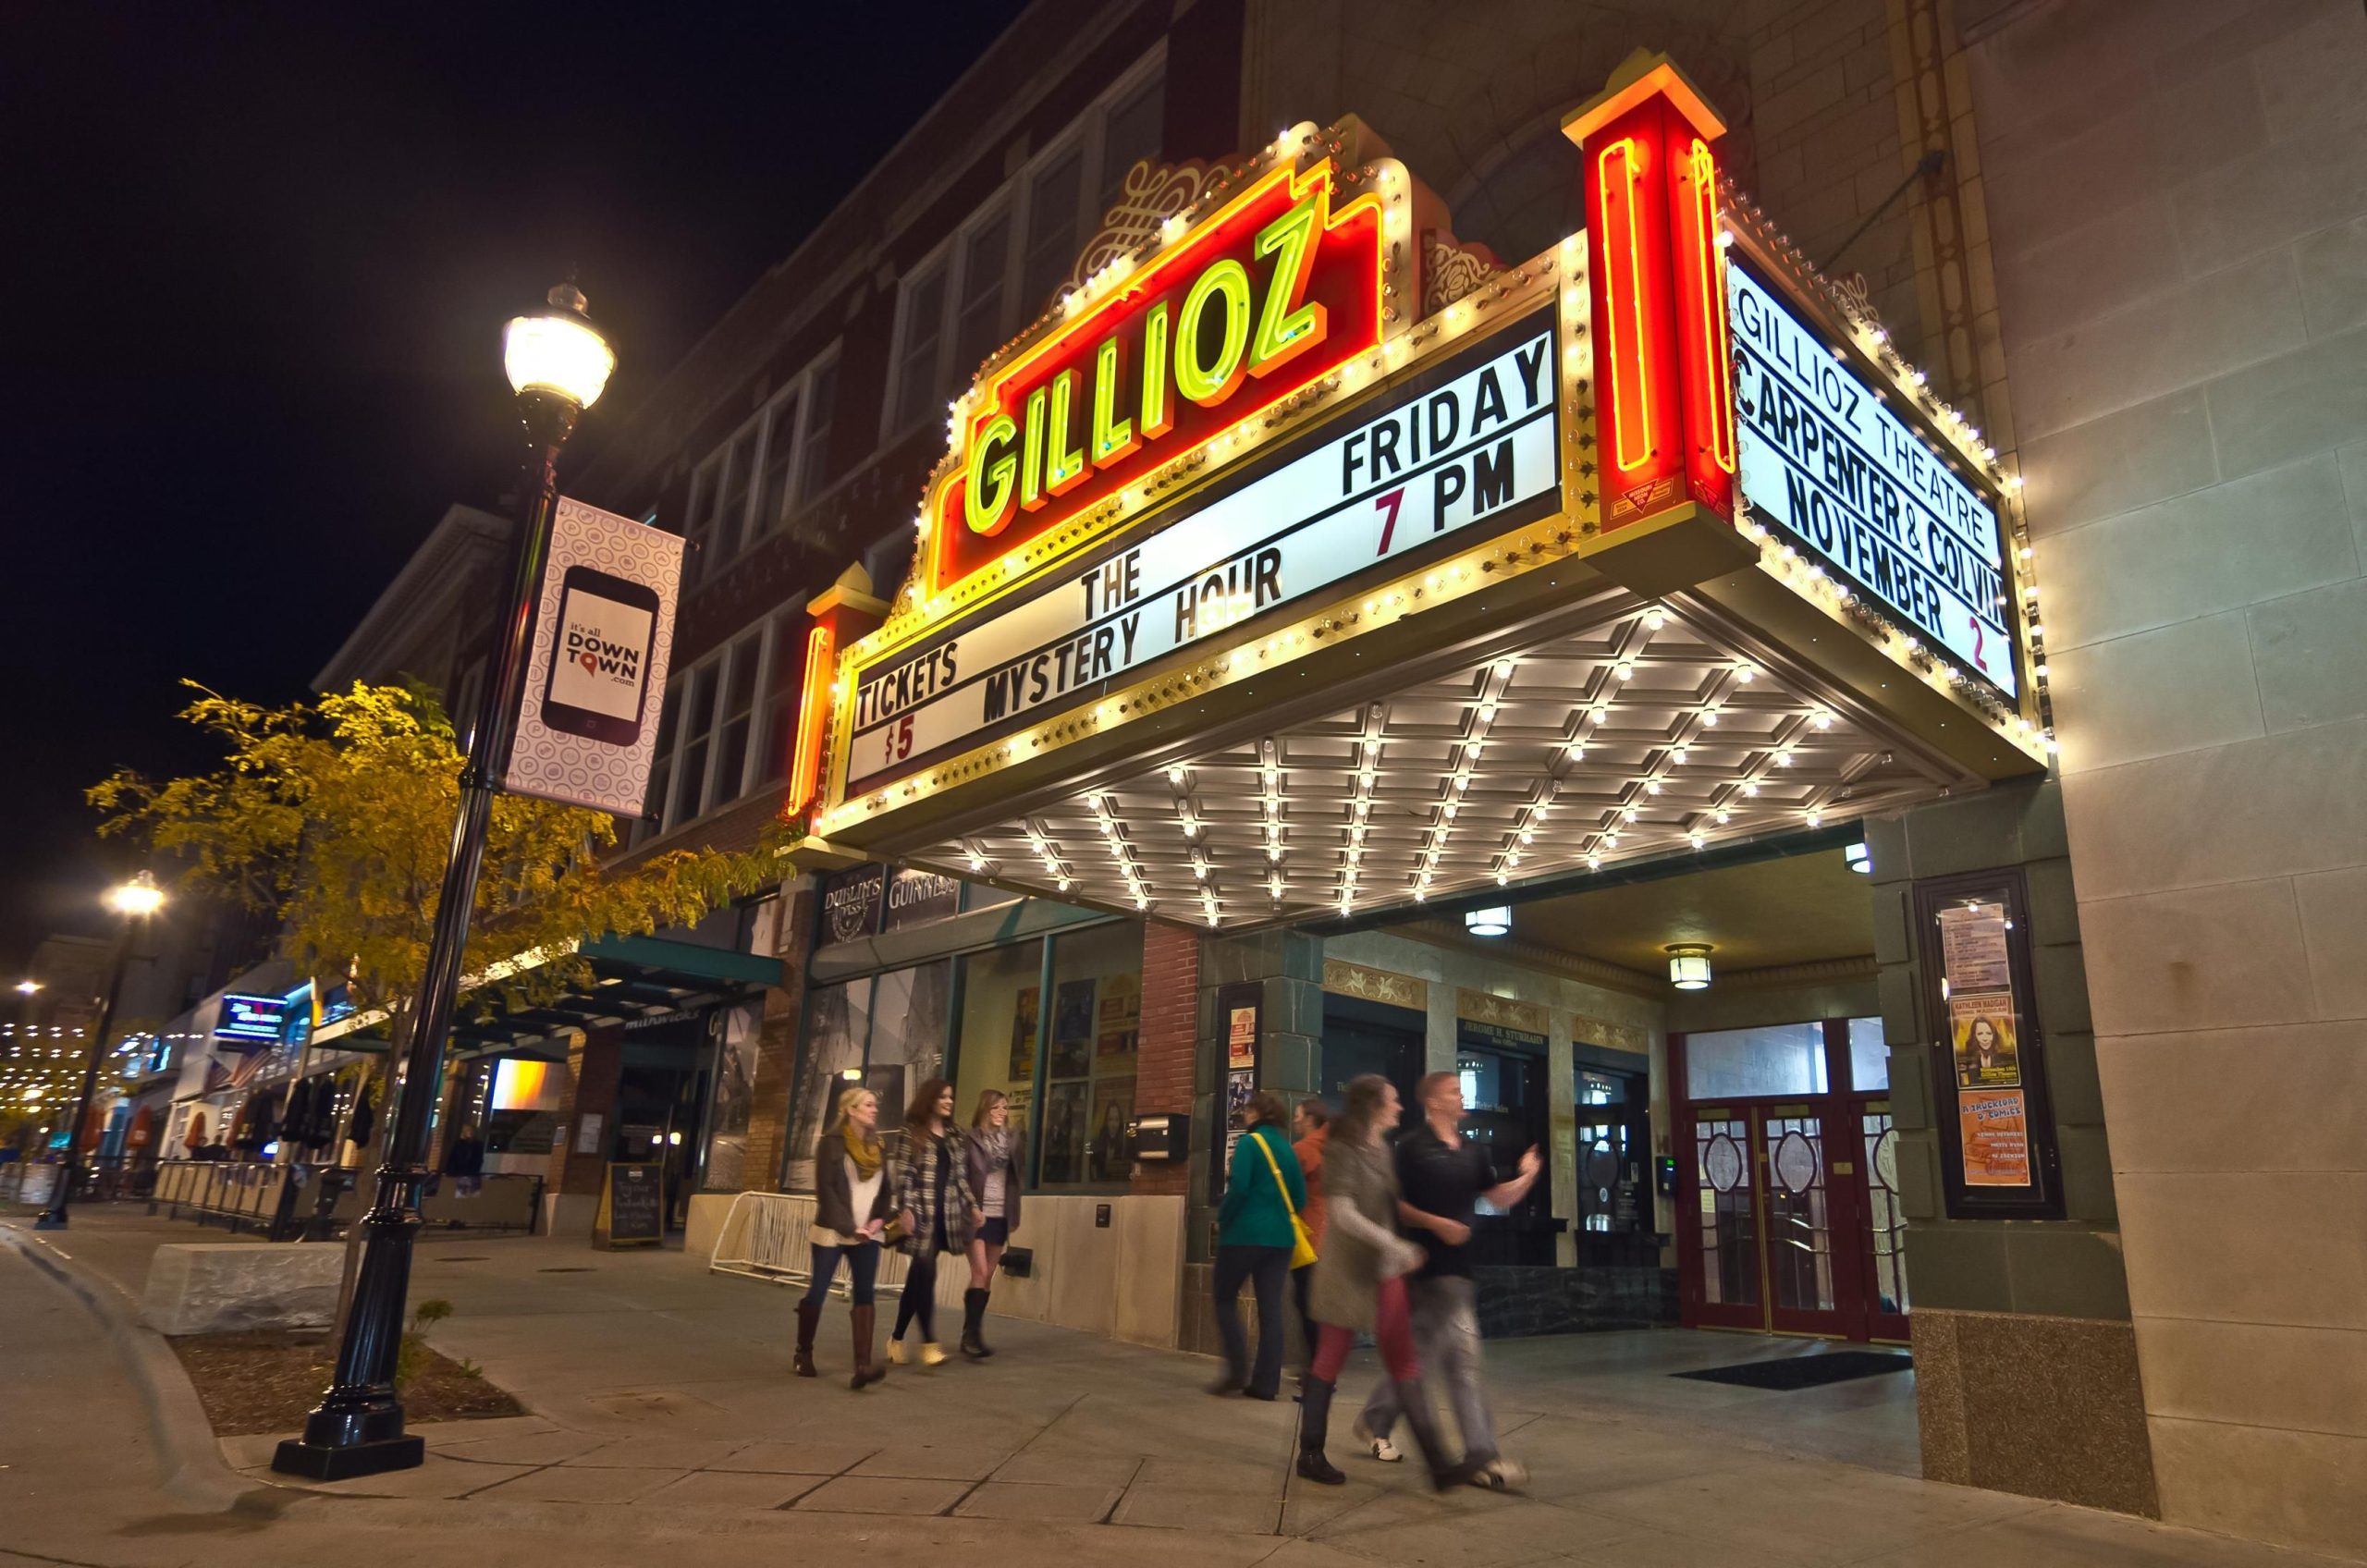 Gillioz Theater at Night